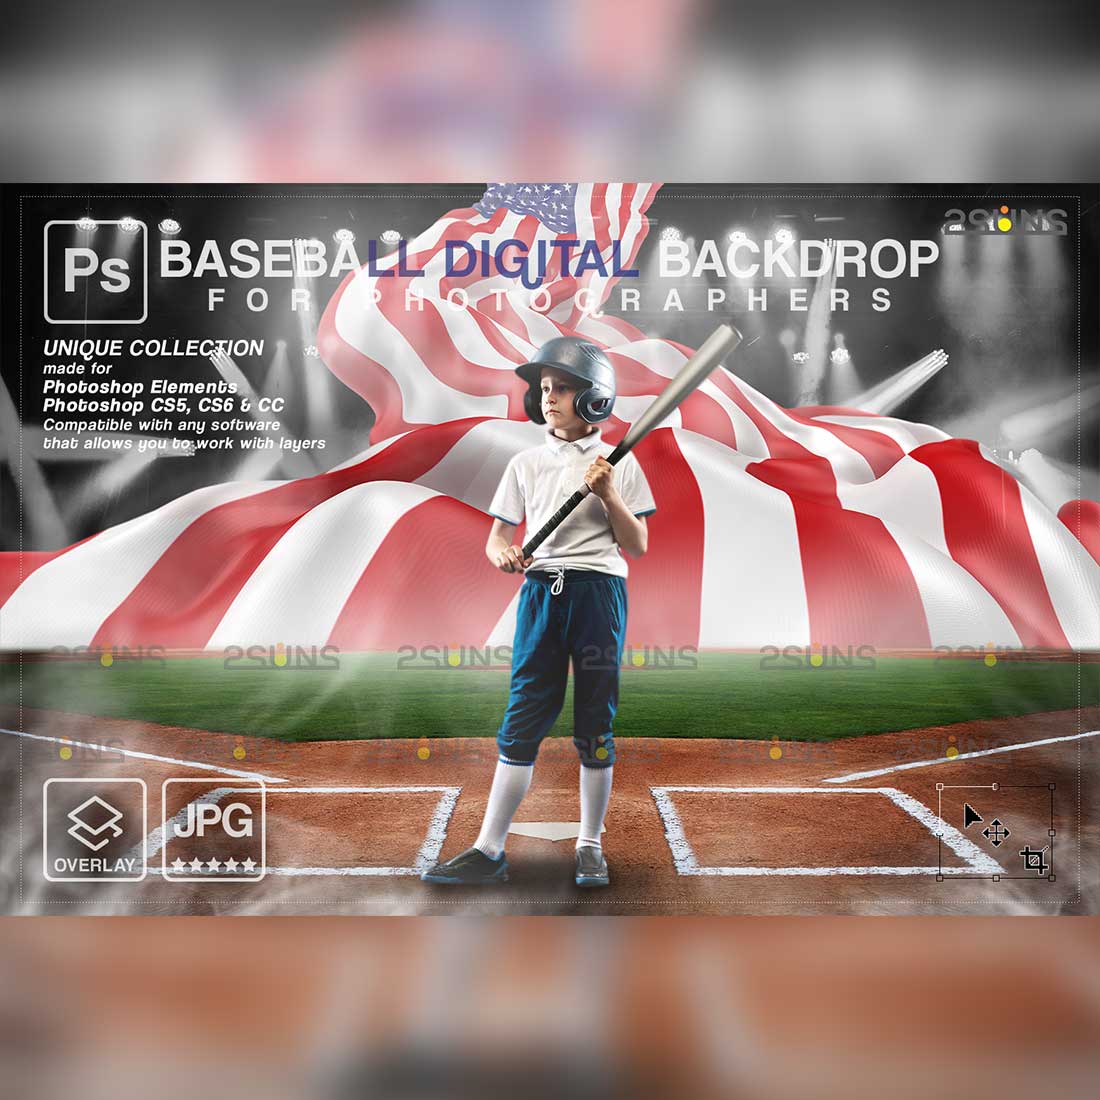 Baseball Backdrop American Flag Sports Digital Photoshop Overlay Cover Image.